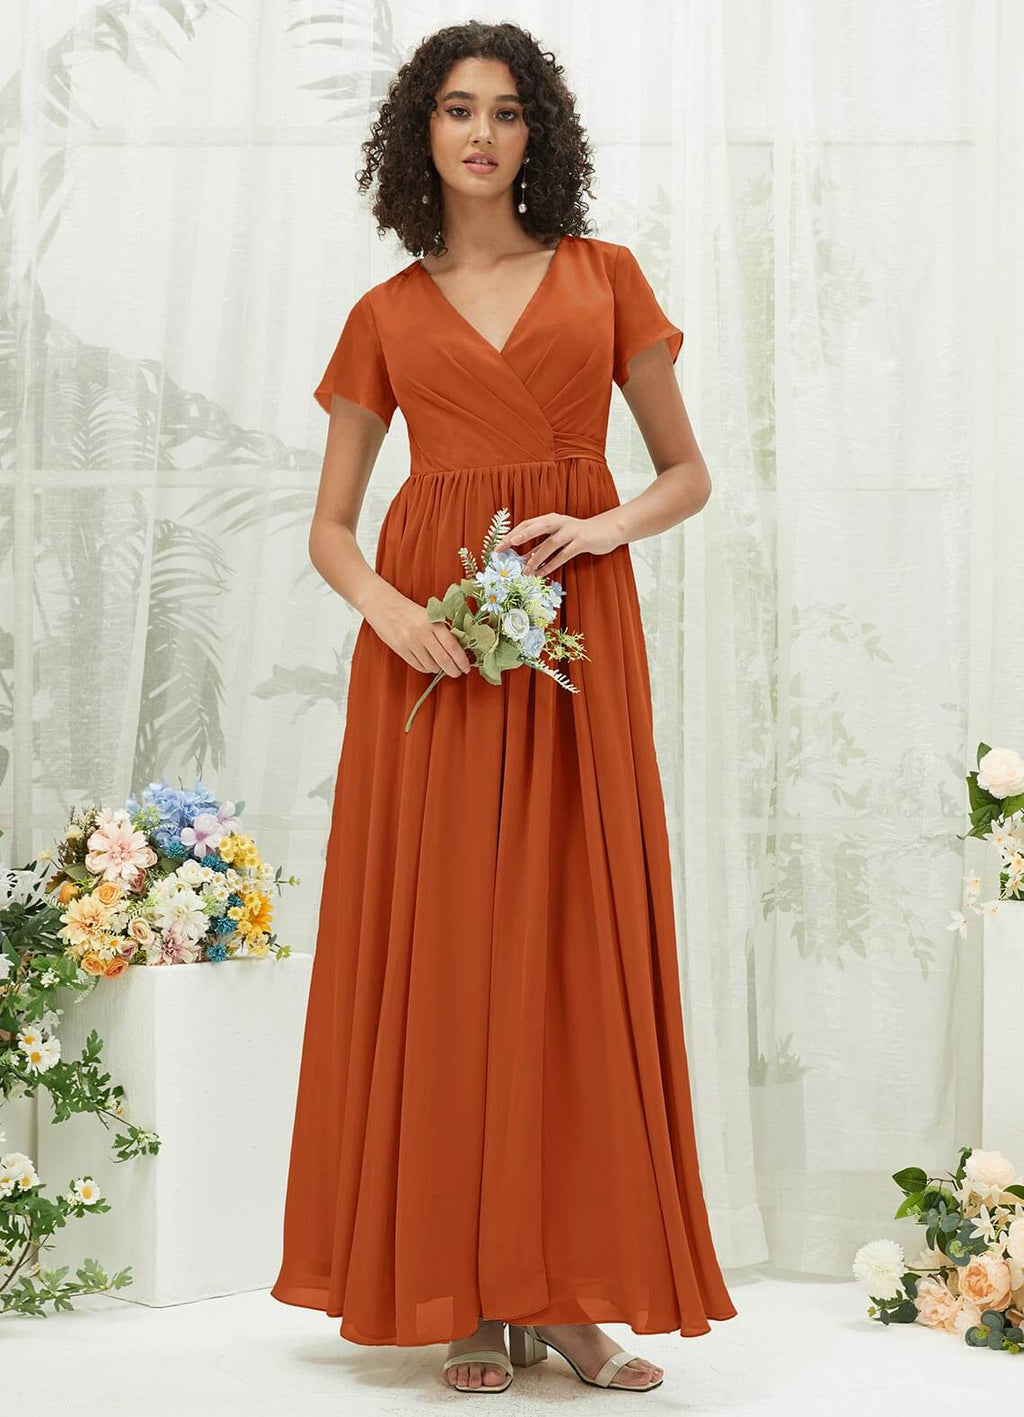 NZ Bridal Burnt Orange Short Sleeves Chiffon bridesmaid dresses R0107 Harow a